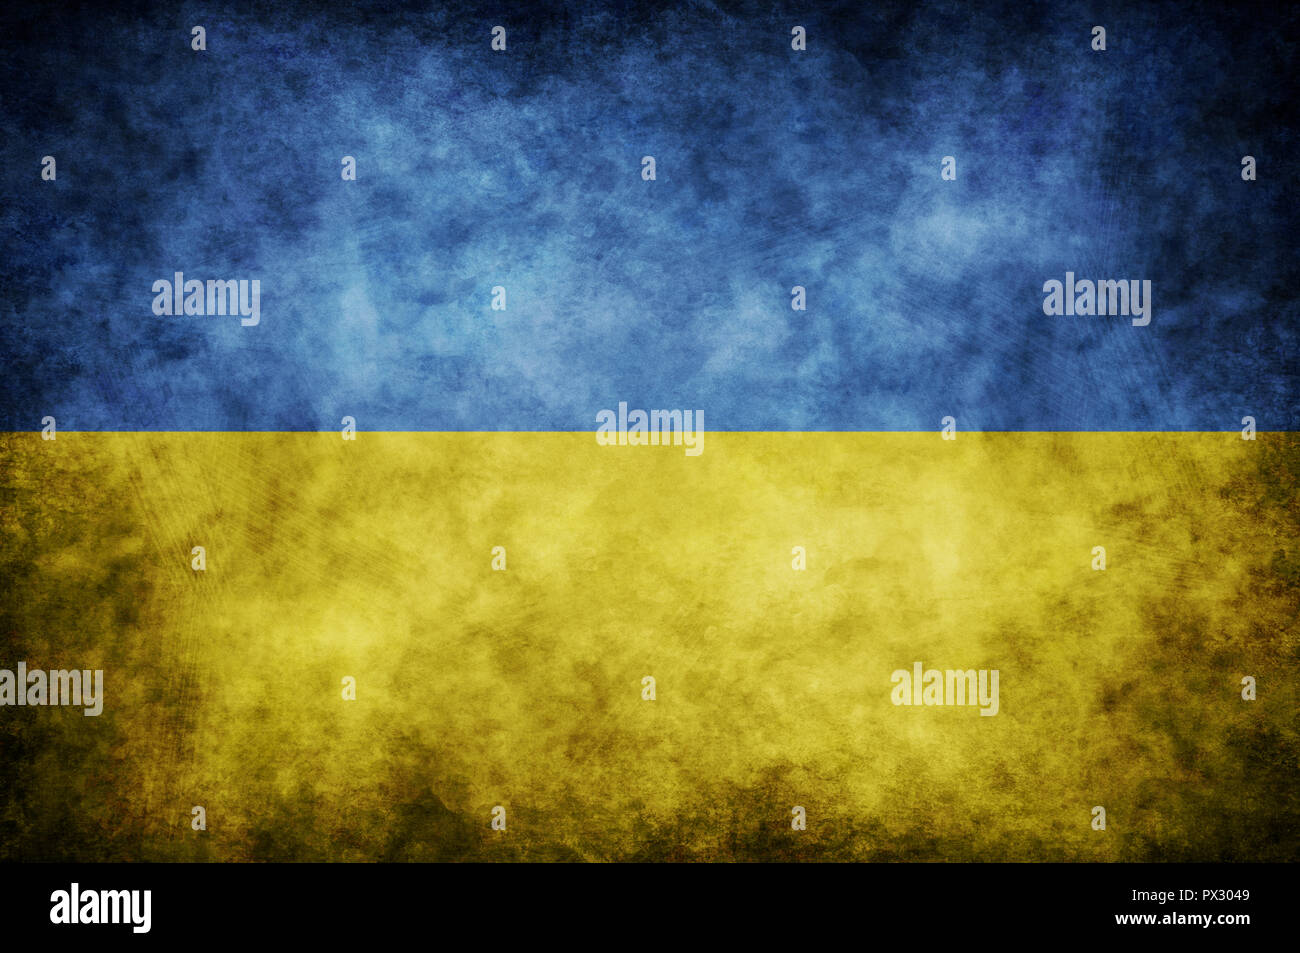 Grunge ukrainische Flagge Stockfotografie - Alamy